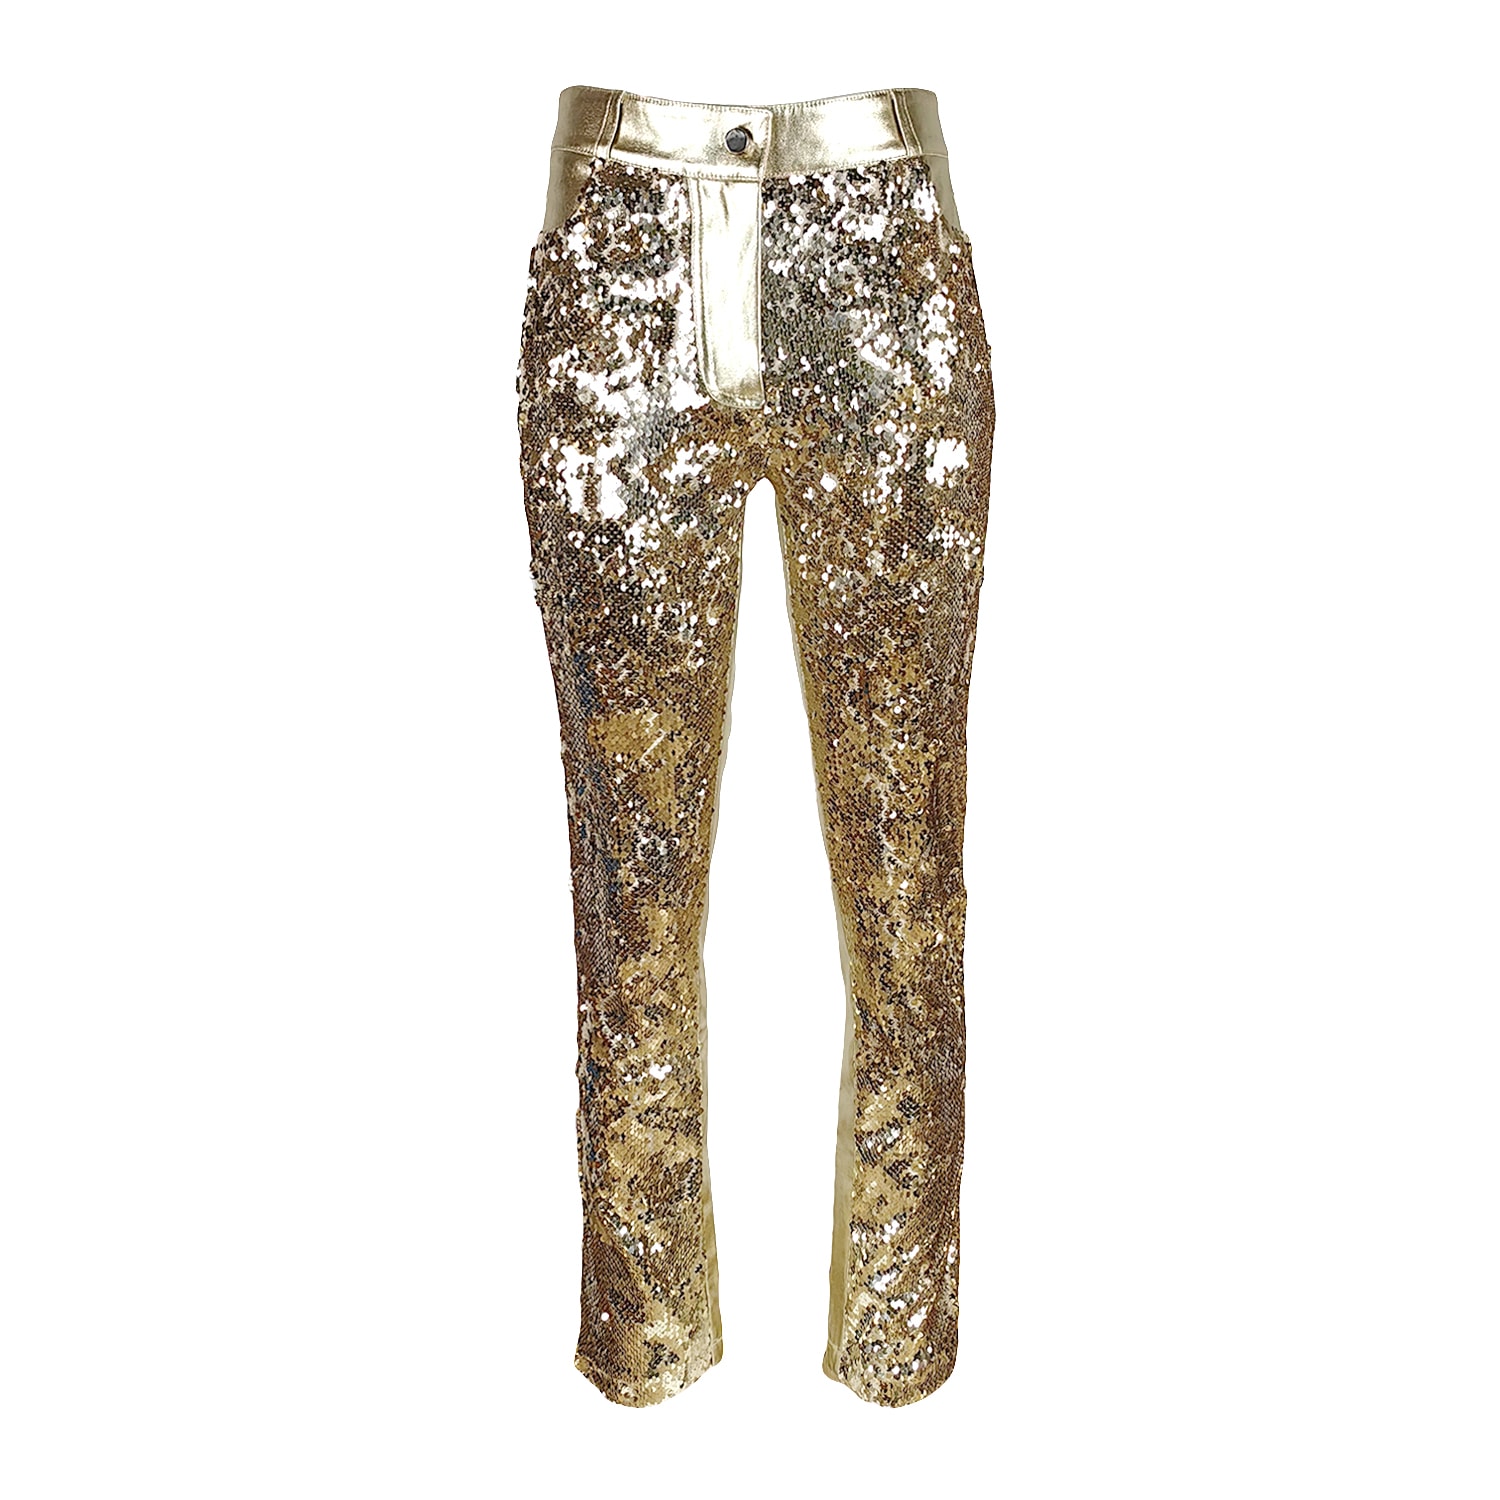 Lalipop Design Women's Double-sided Gold Sequined & Gold Metallic Cotton Blend Pants